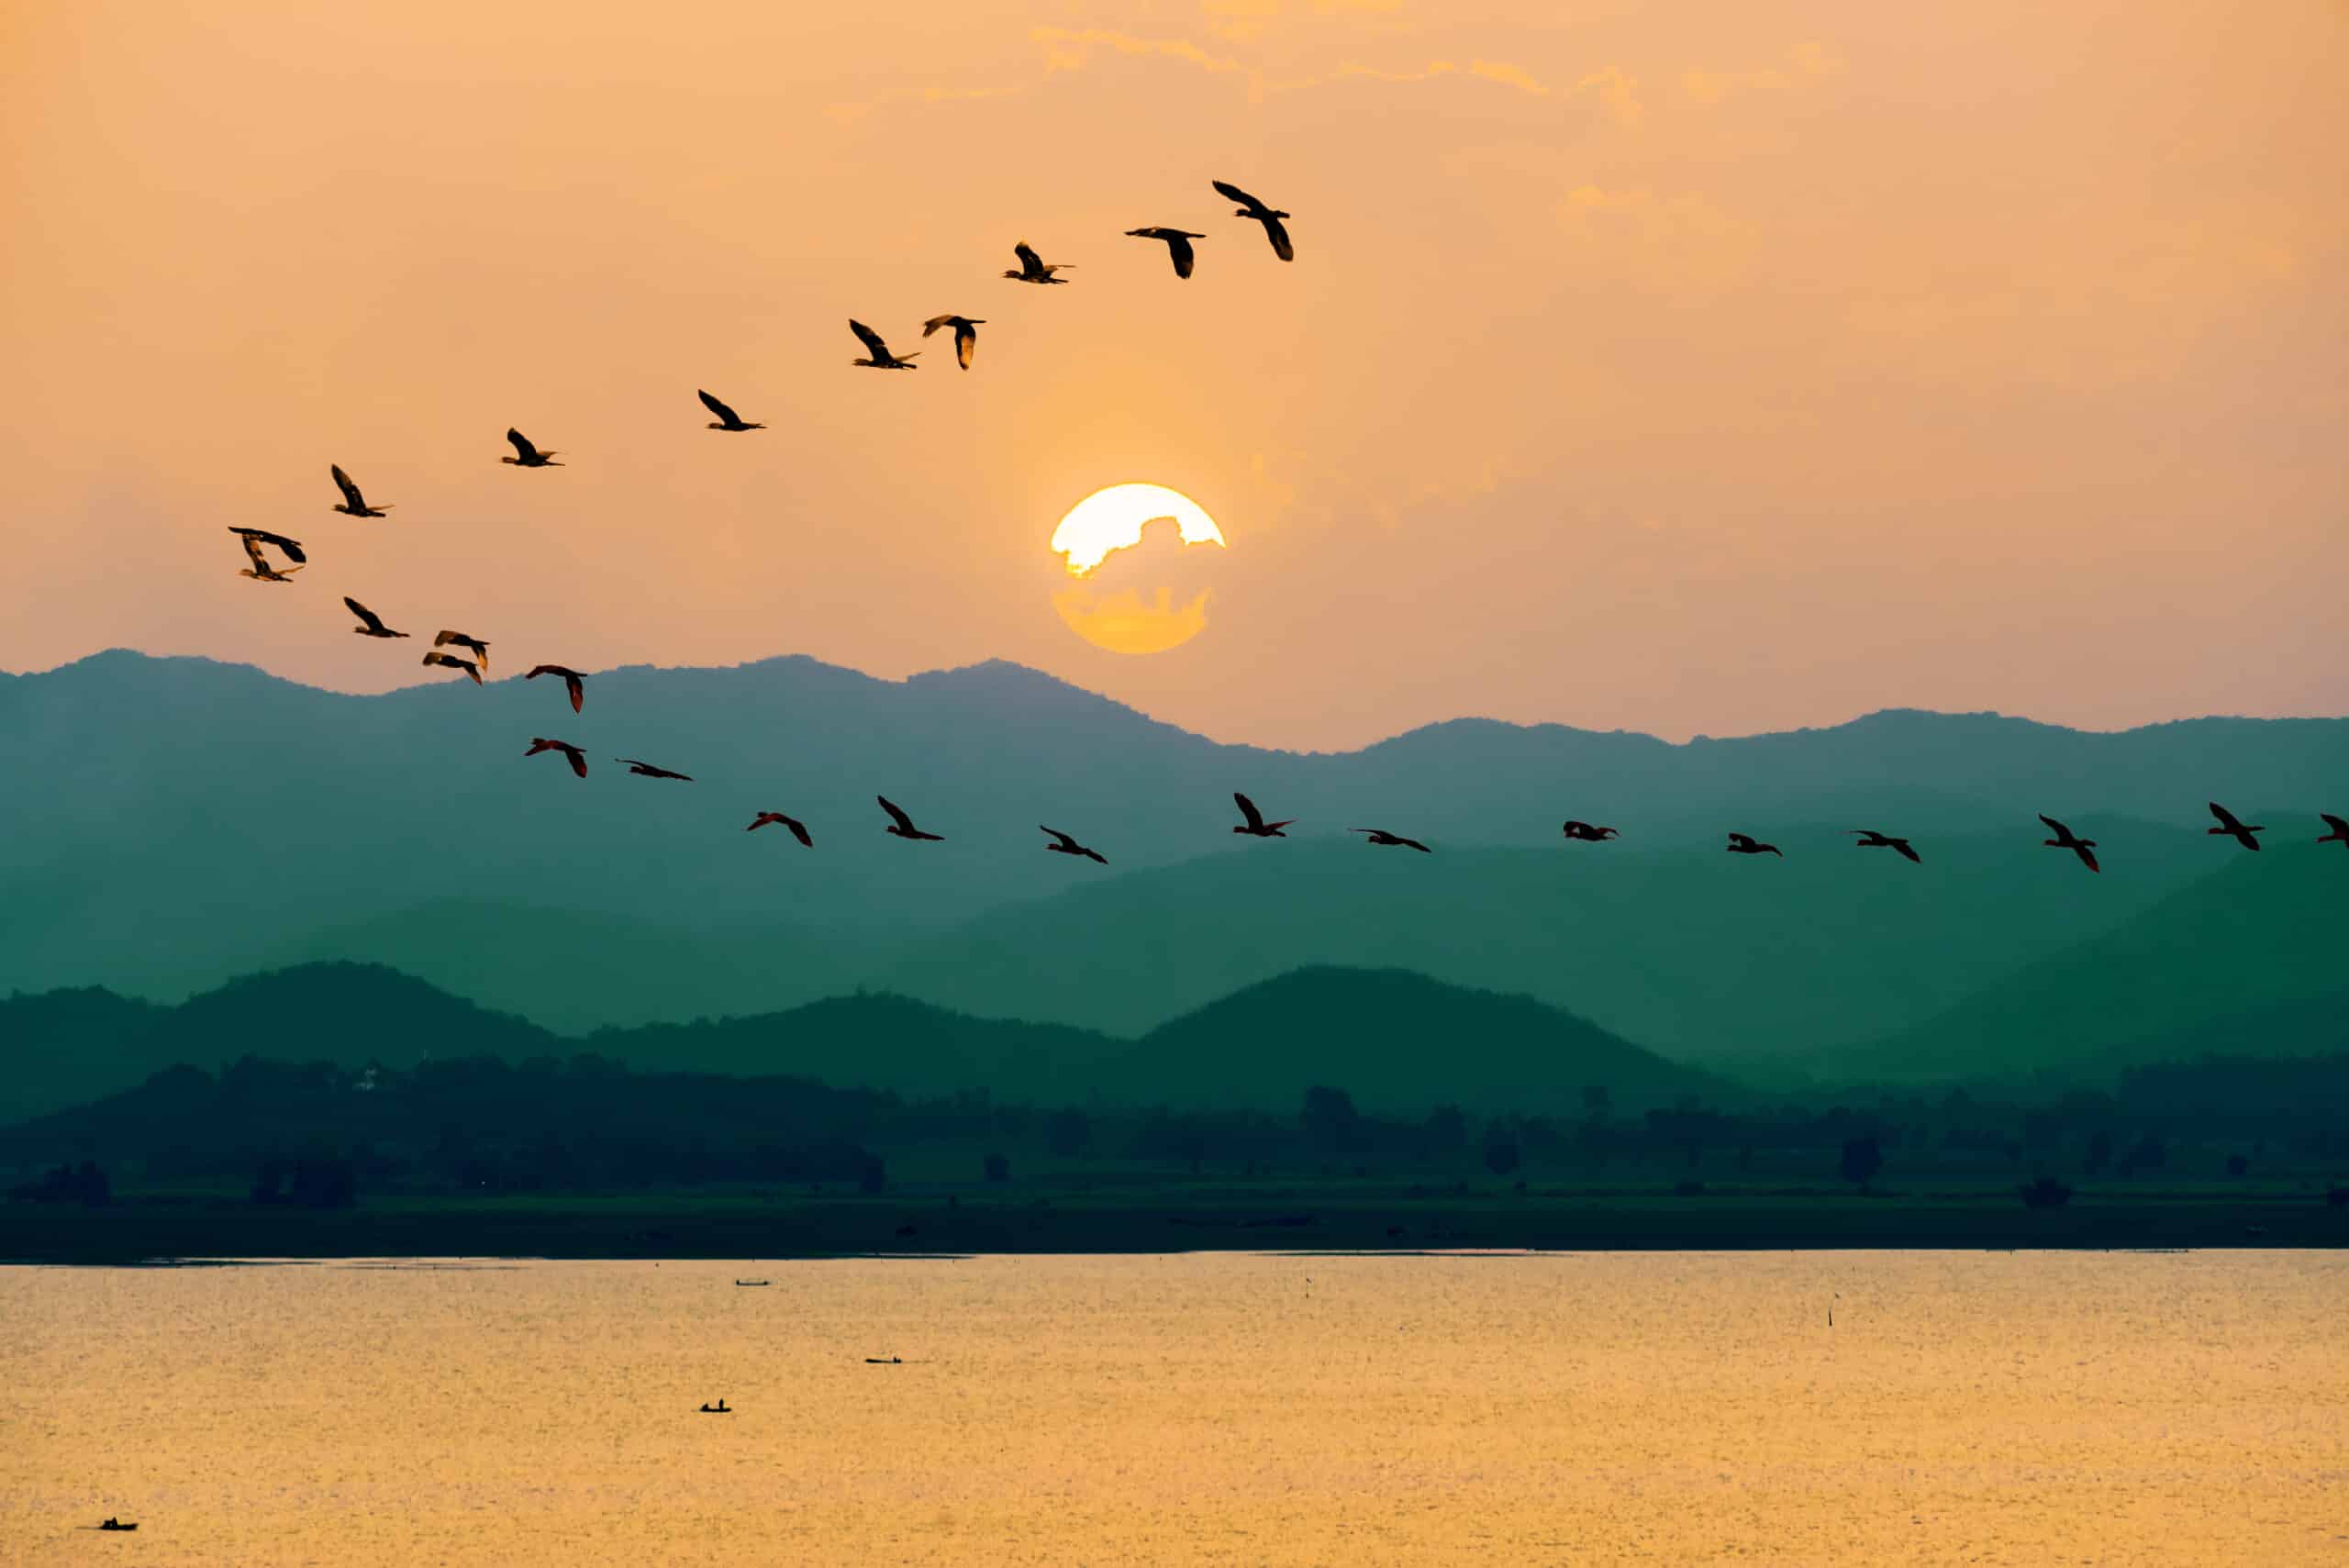 Birds flying over lake during sunset